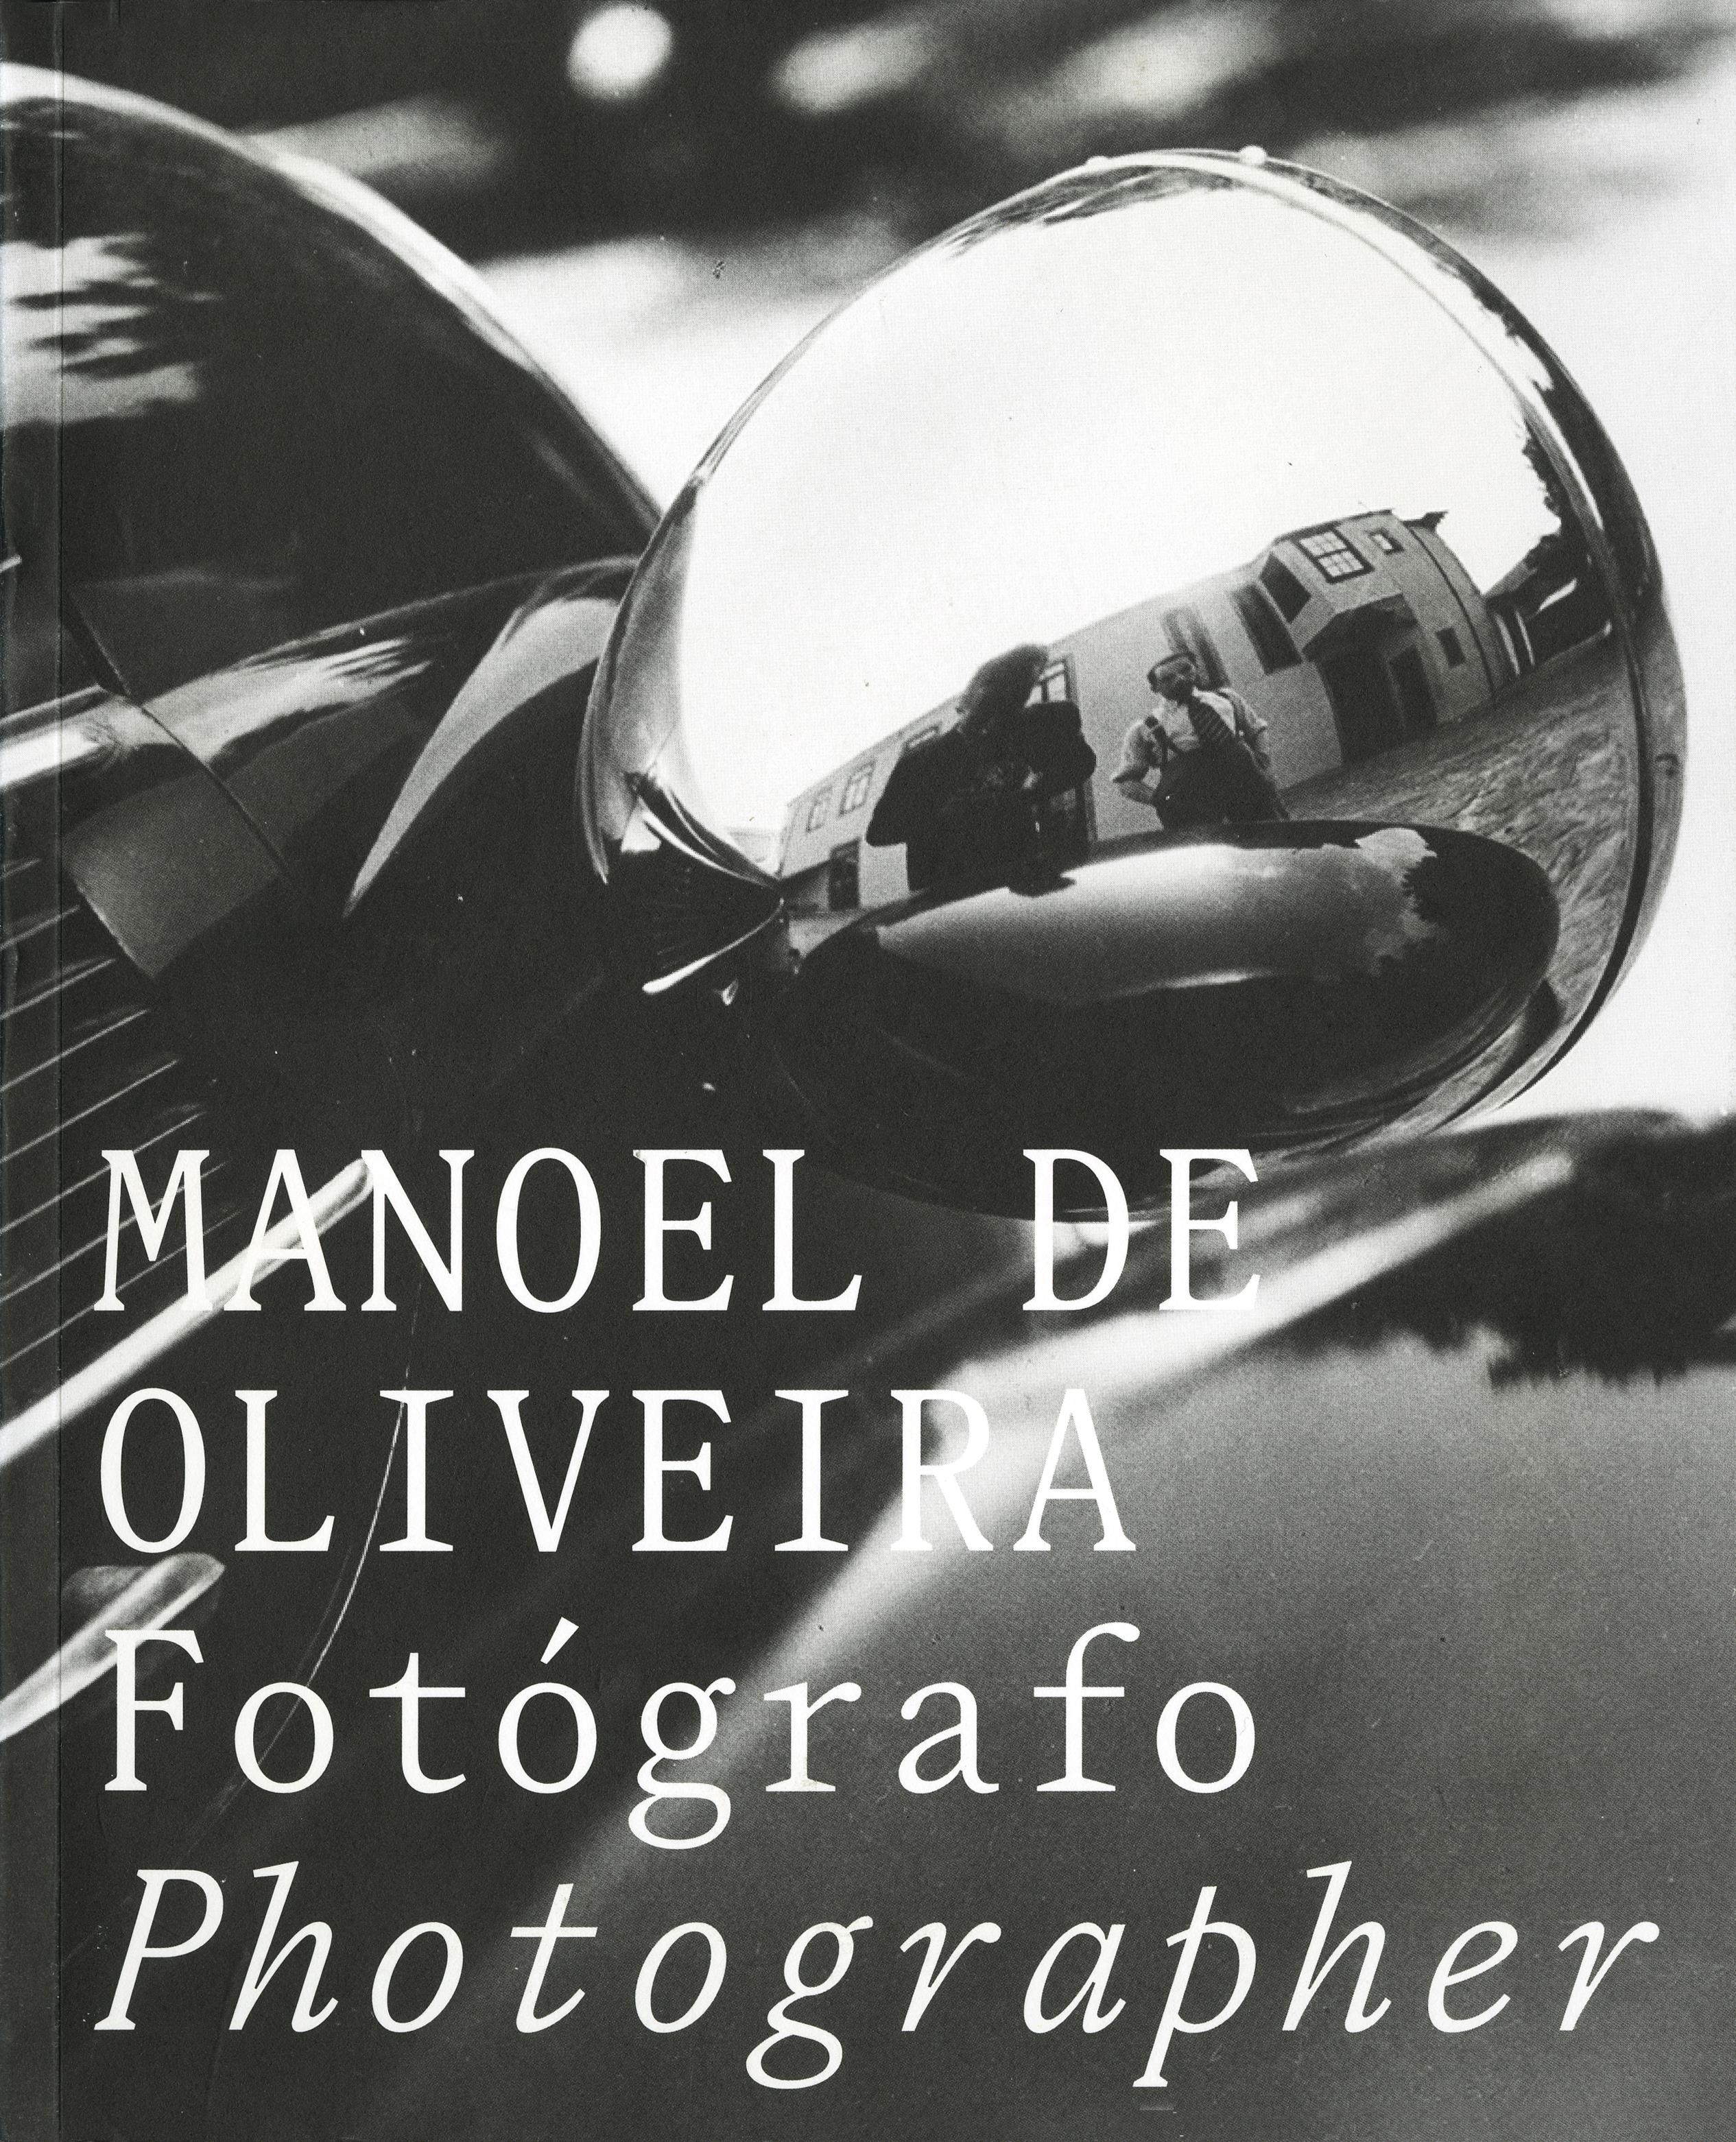 Manoel de Oliveira. Fotógrafo / Manoel de Oliveira. Photographer